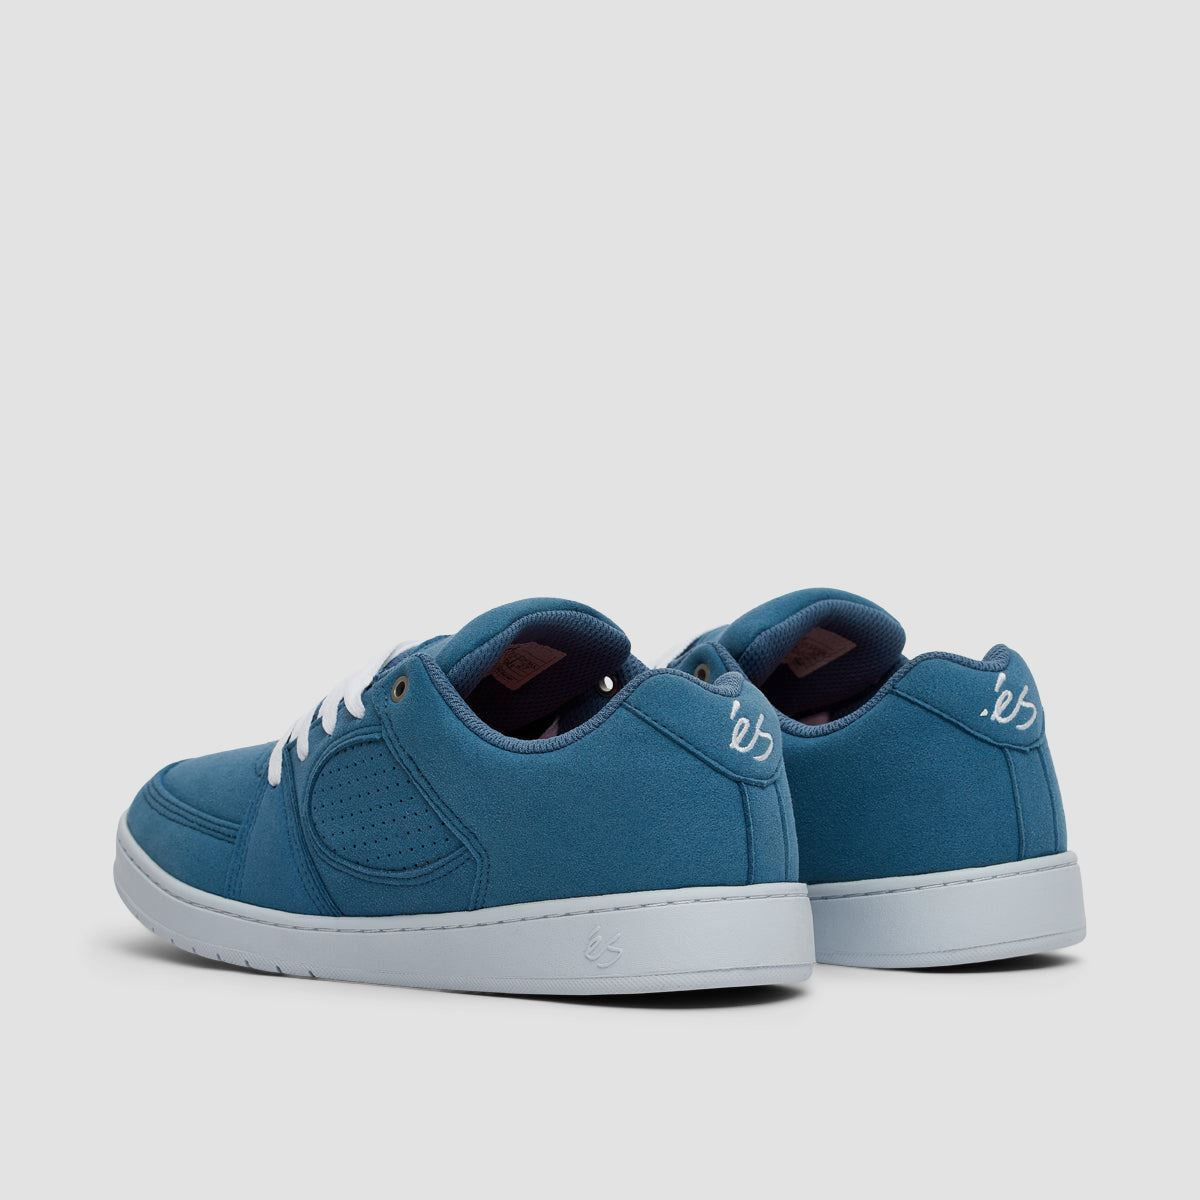 eS Accel Slim Shoes - Blue/Grey/White